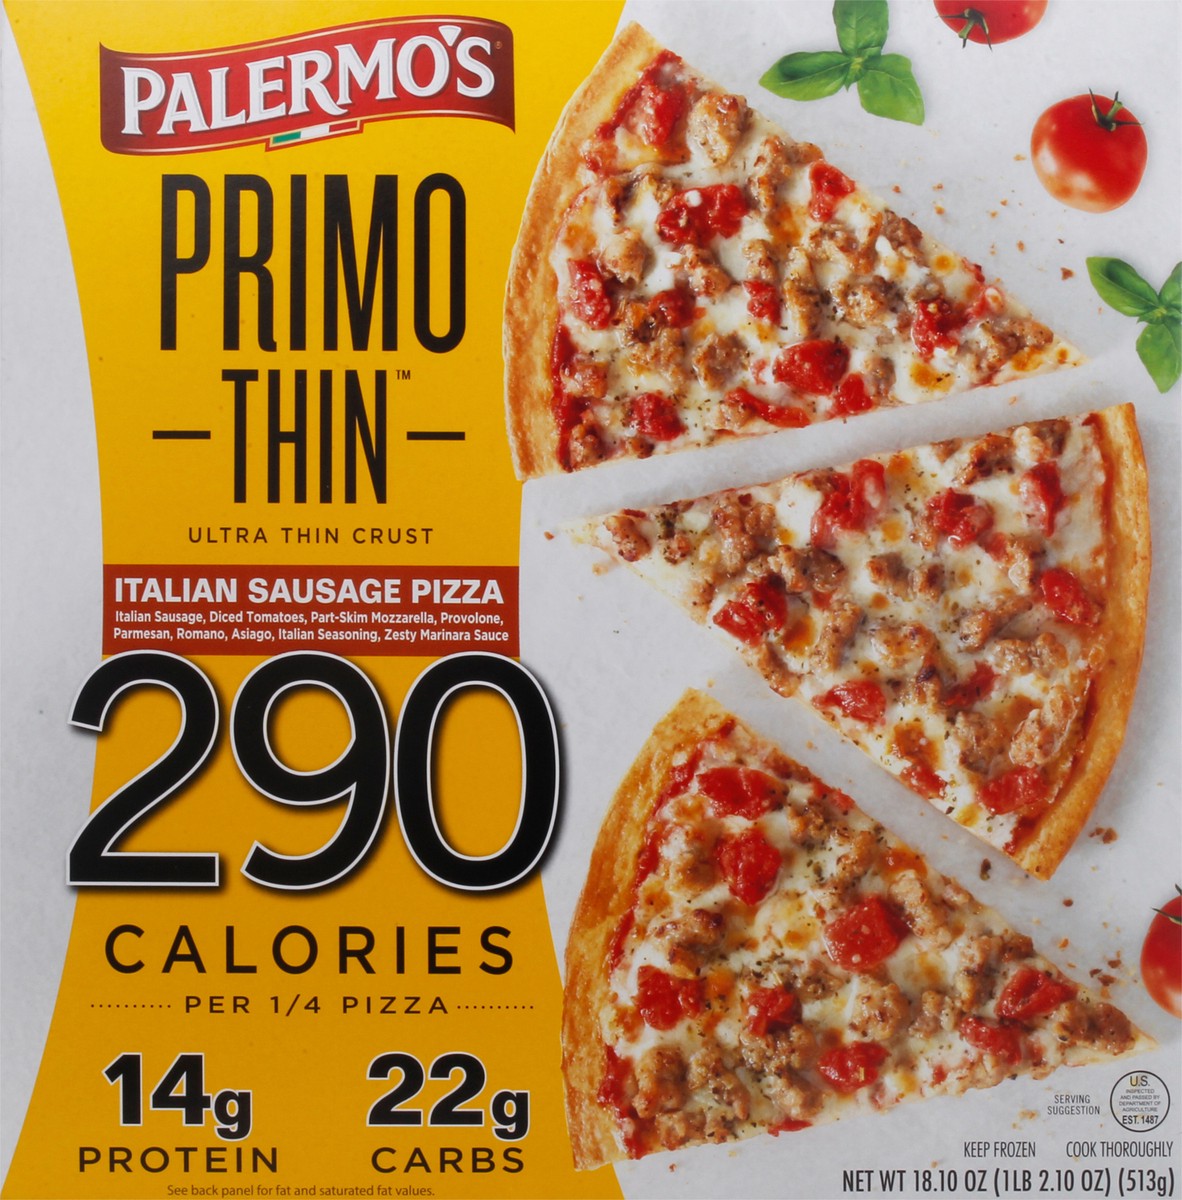 slide 5 of 9, Palermo's Primo Thin Ultra Thin Crust Italian Sausage Pizza 18.1 oz, 18.1 oz